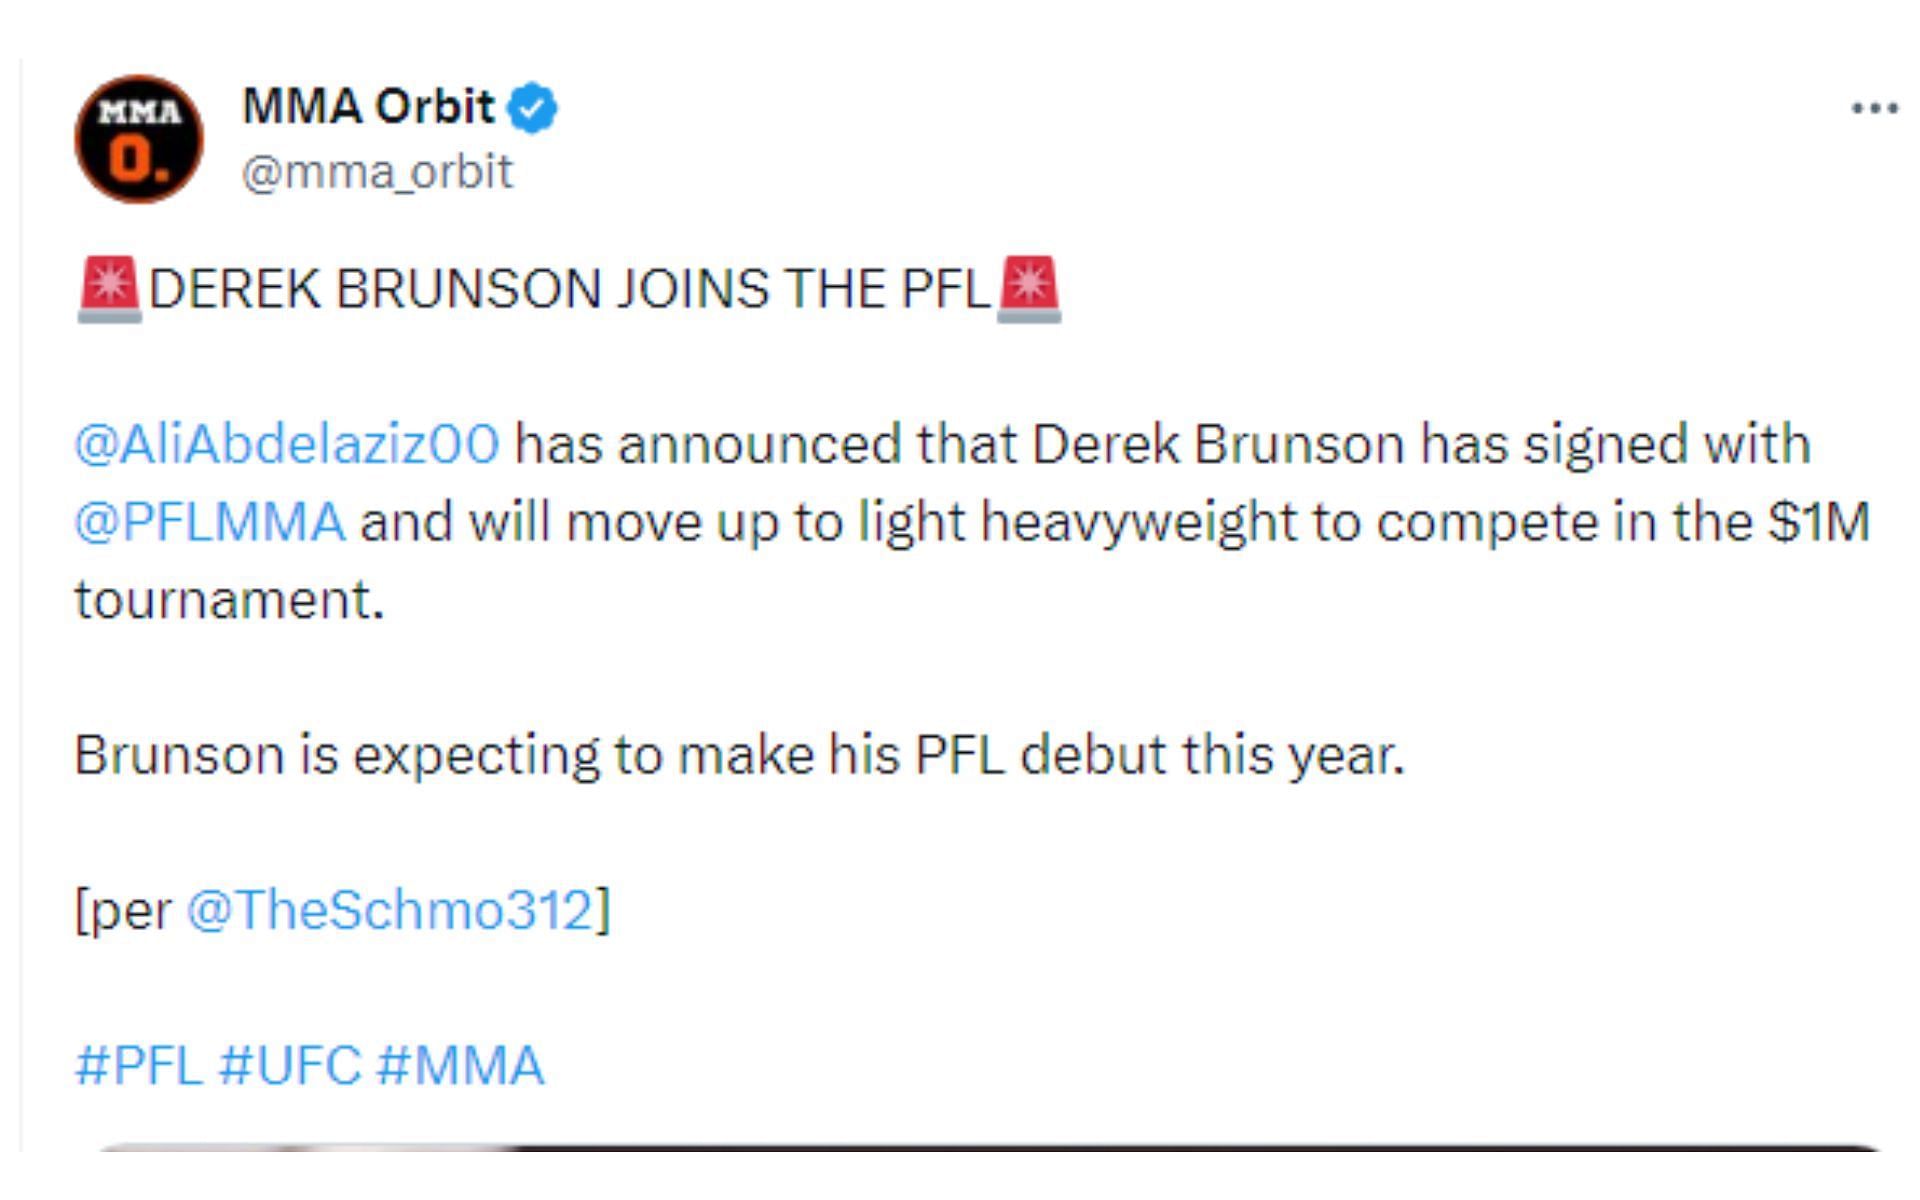 Tweet regarding Derek Brunson joining the PFL